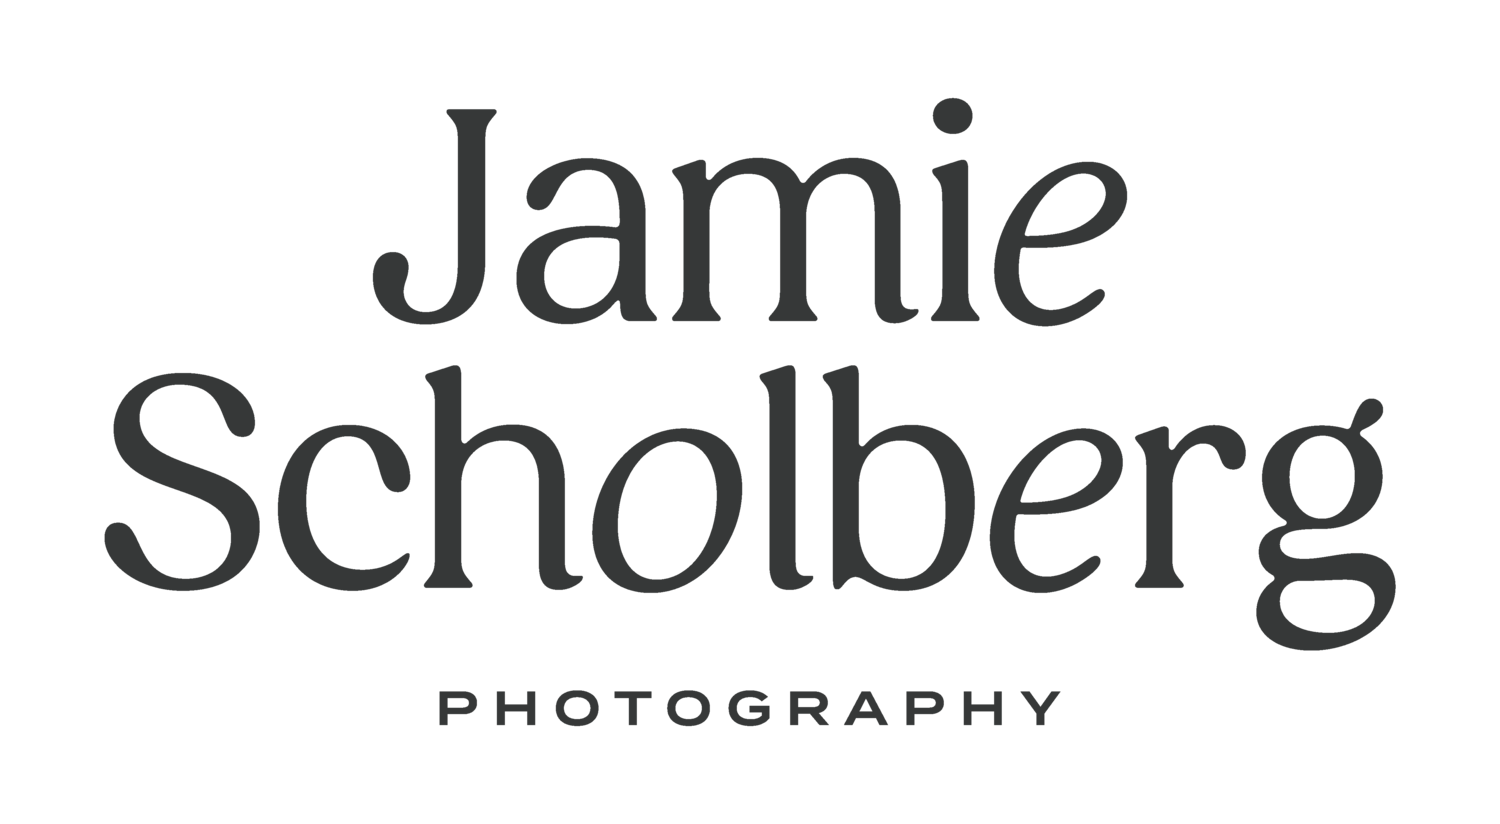 JAMIE SCHOLBERG PHOTOGRAPY